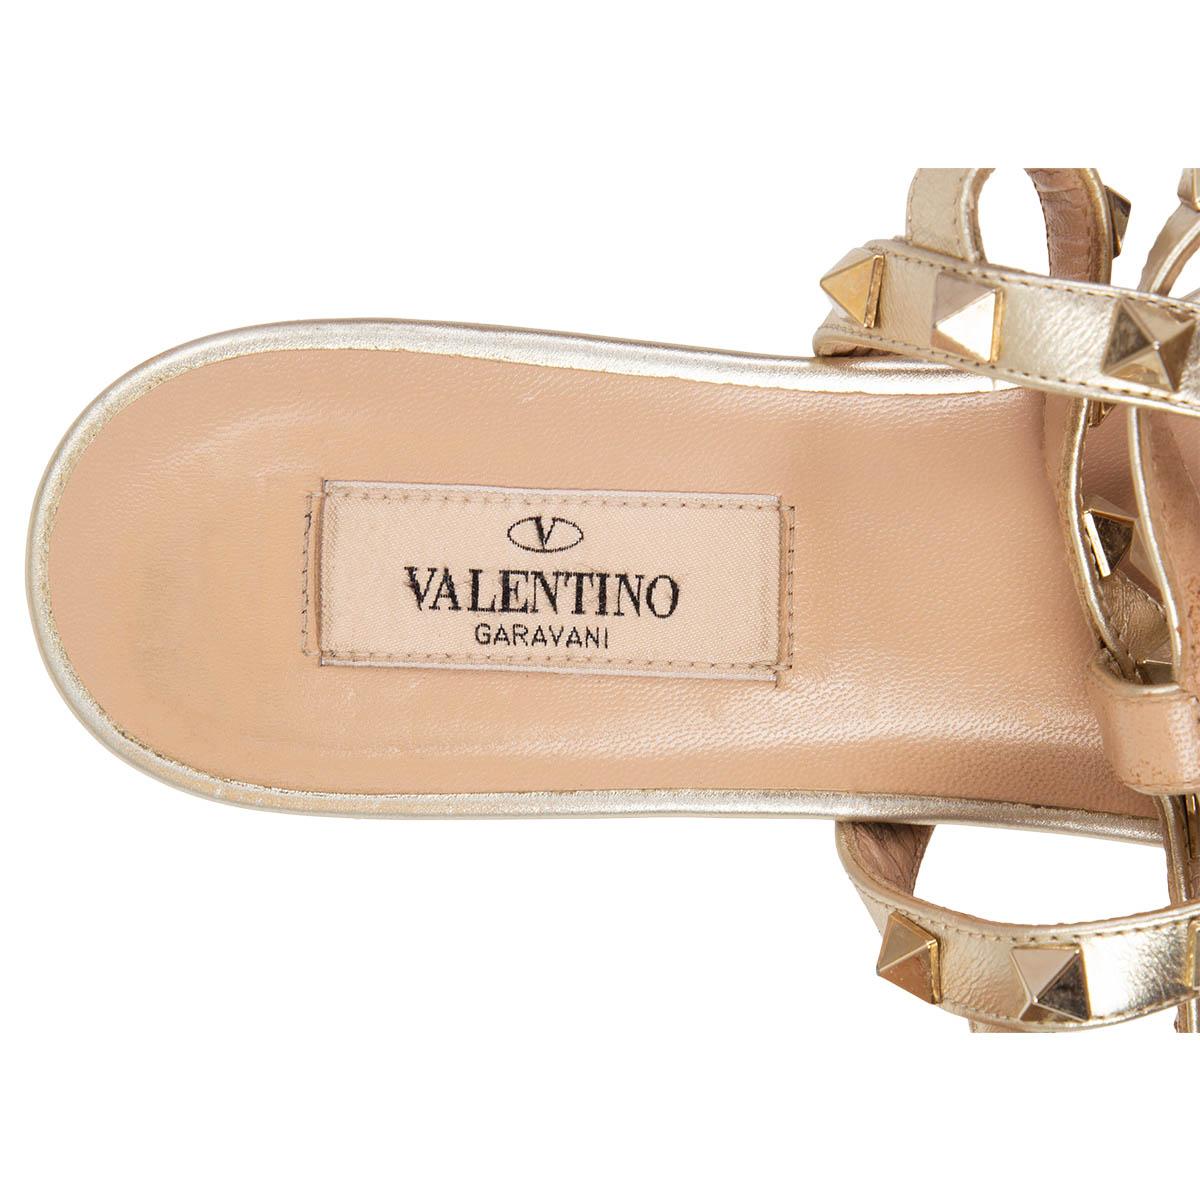 VALENTINO metallic gold leather ROCKSTUD Flat Sandals Shoes 37 1